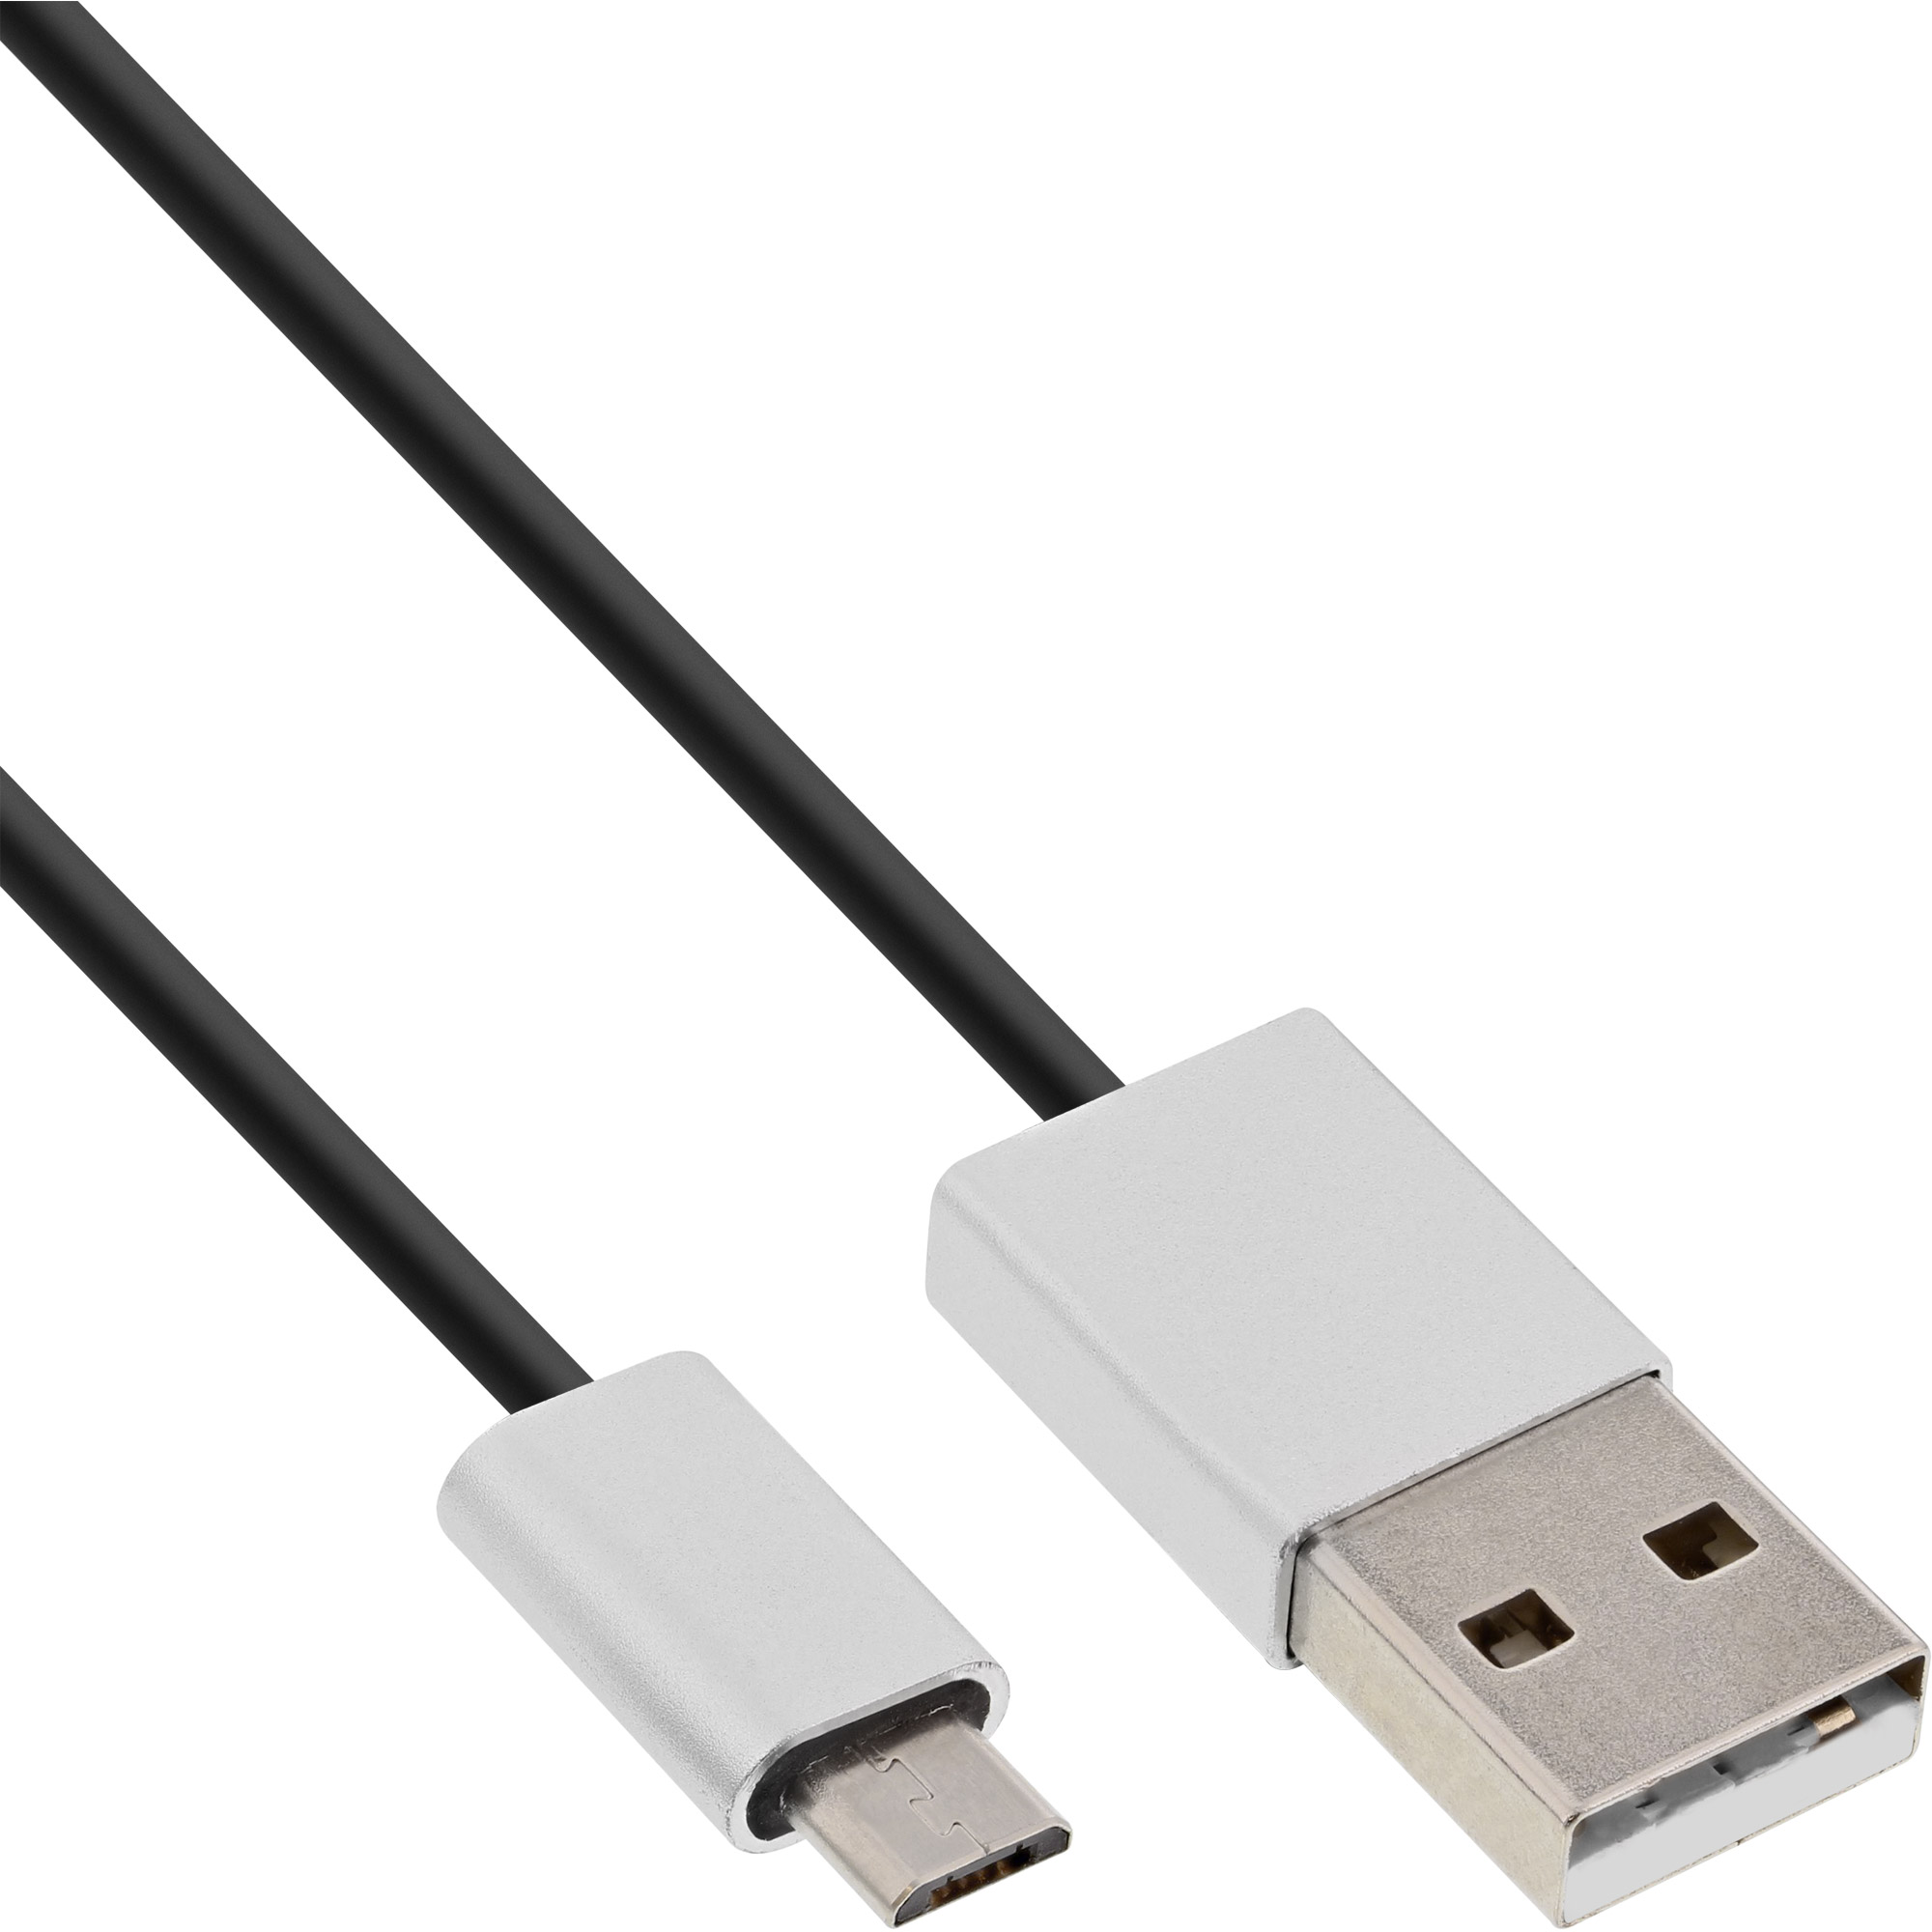 InLine® Micro-USB 2.0 Kabel, USB-A Stecker an Micro-B Stecker, schwarz/Alu, flexibel, 5m